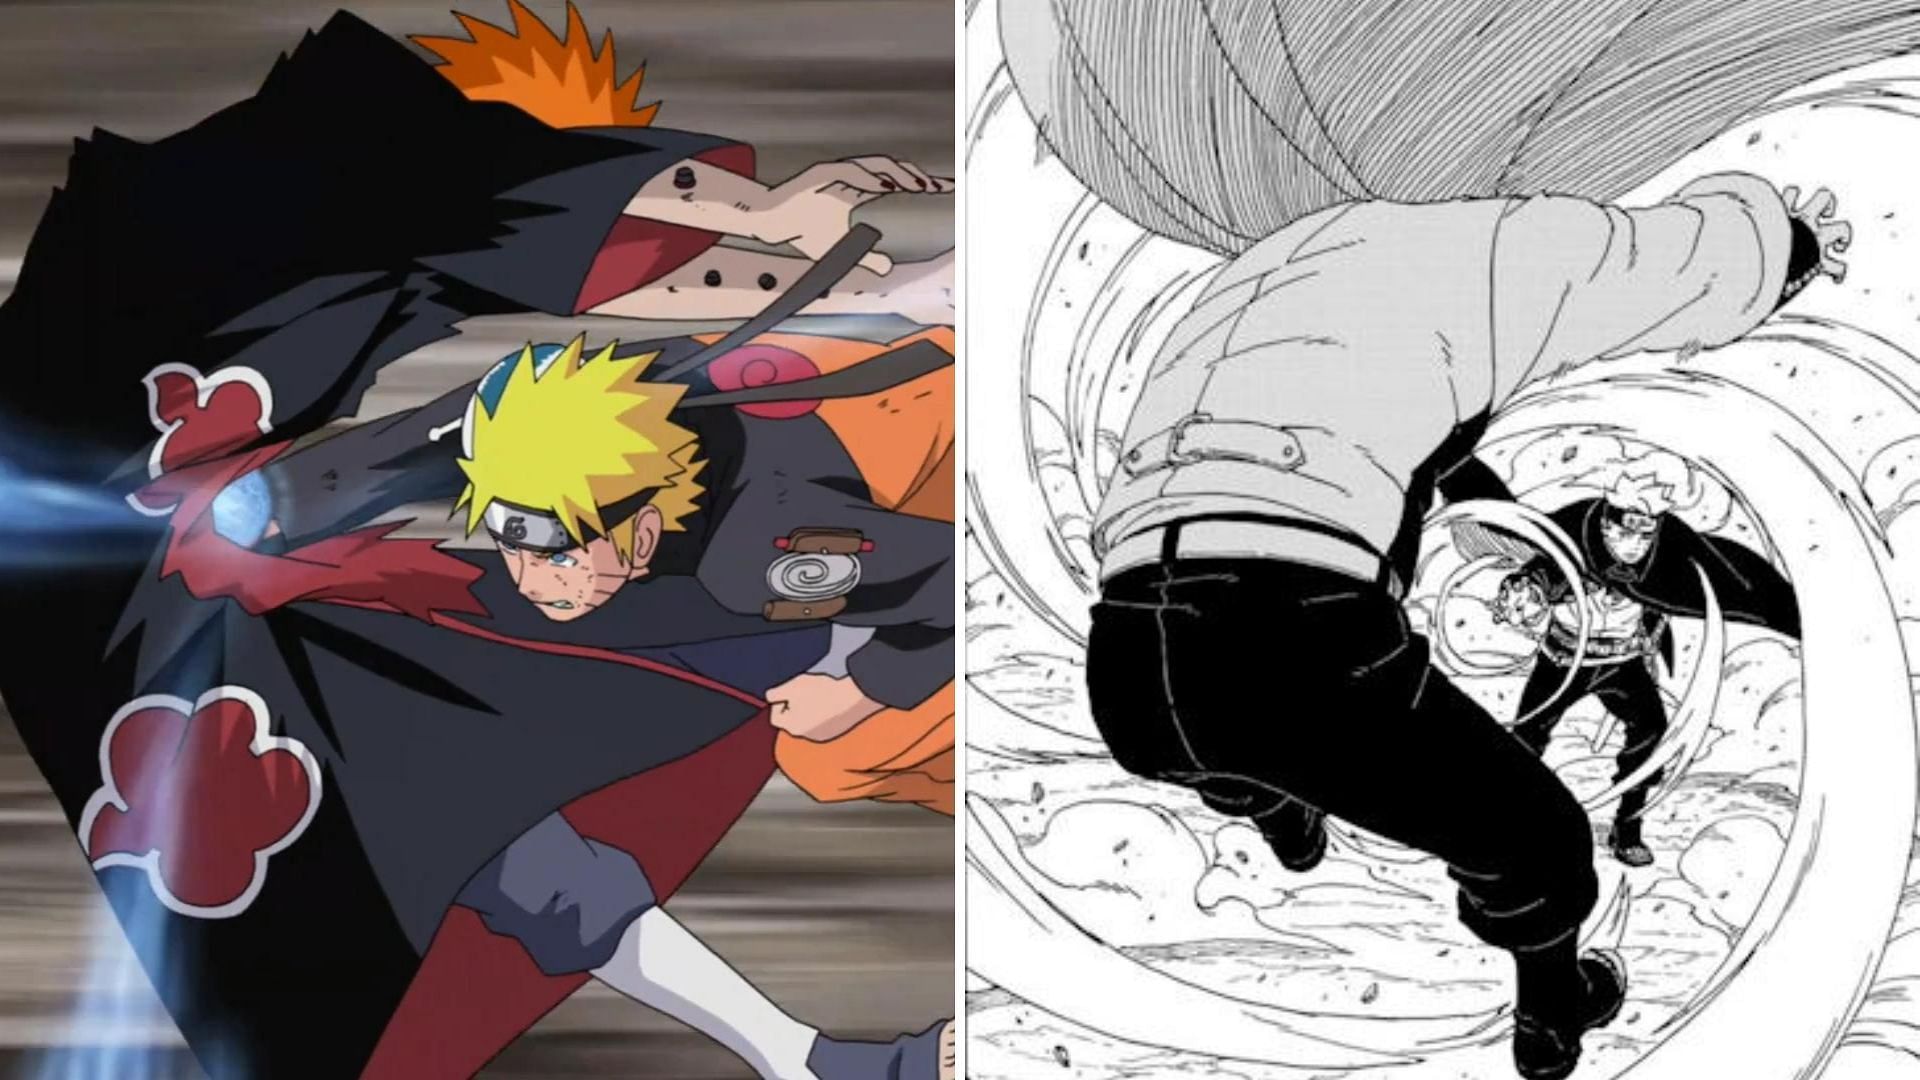 Rate this drawing out of 10 (Naruto vs Pain maga panel)